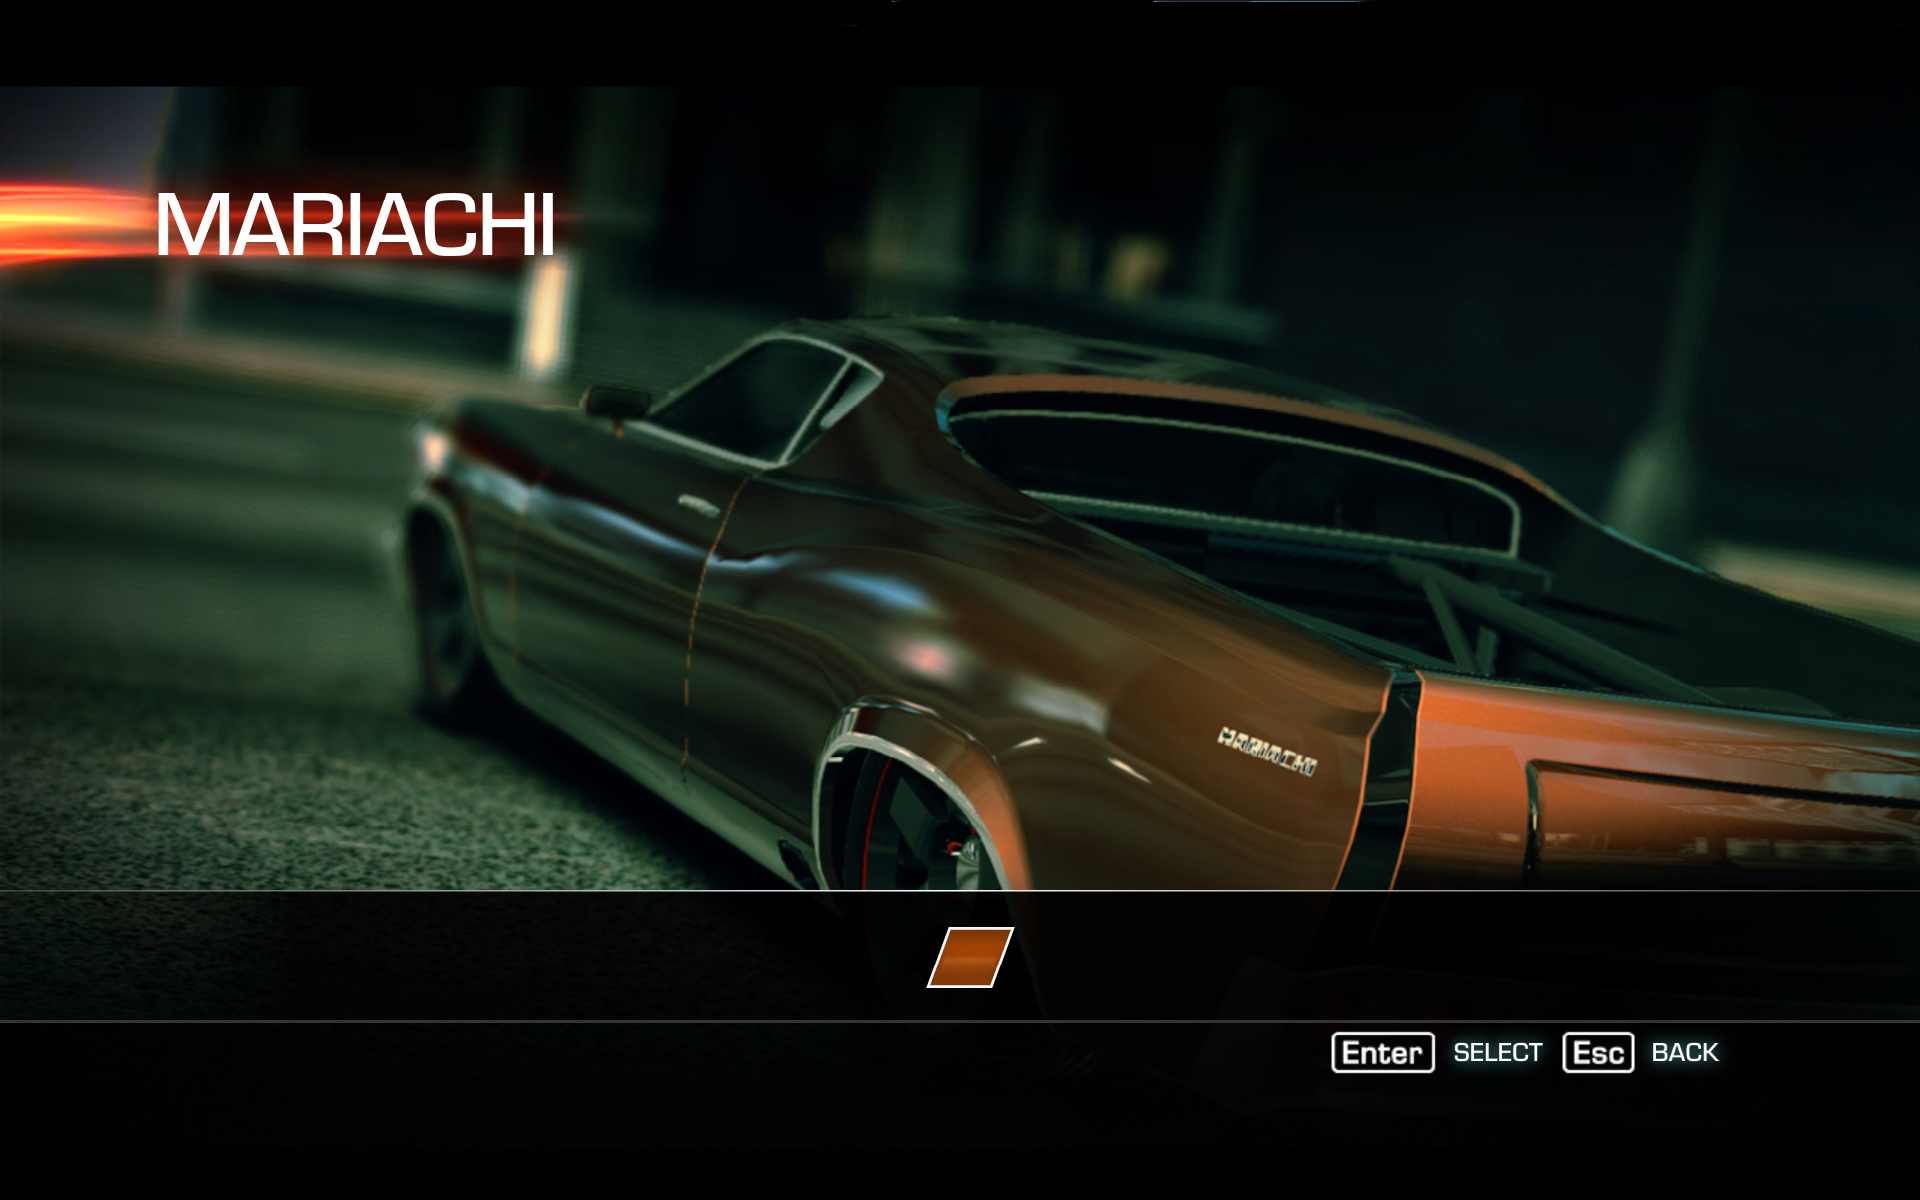 Ridge Racer Unbounded - Ridge Racer Type 4 Machine and  El Mariachi Pack screenshot